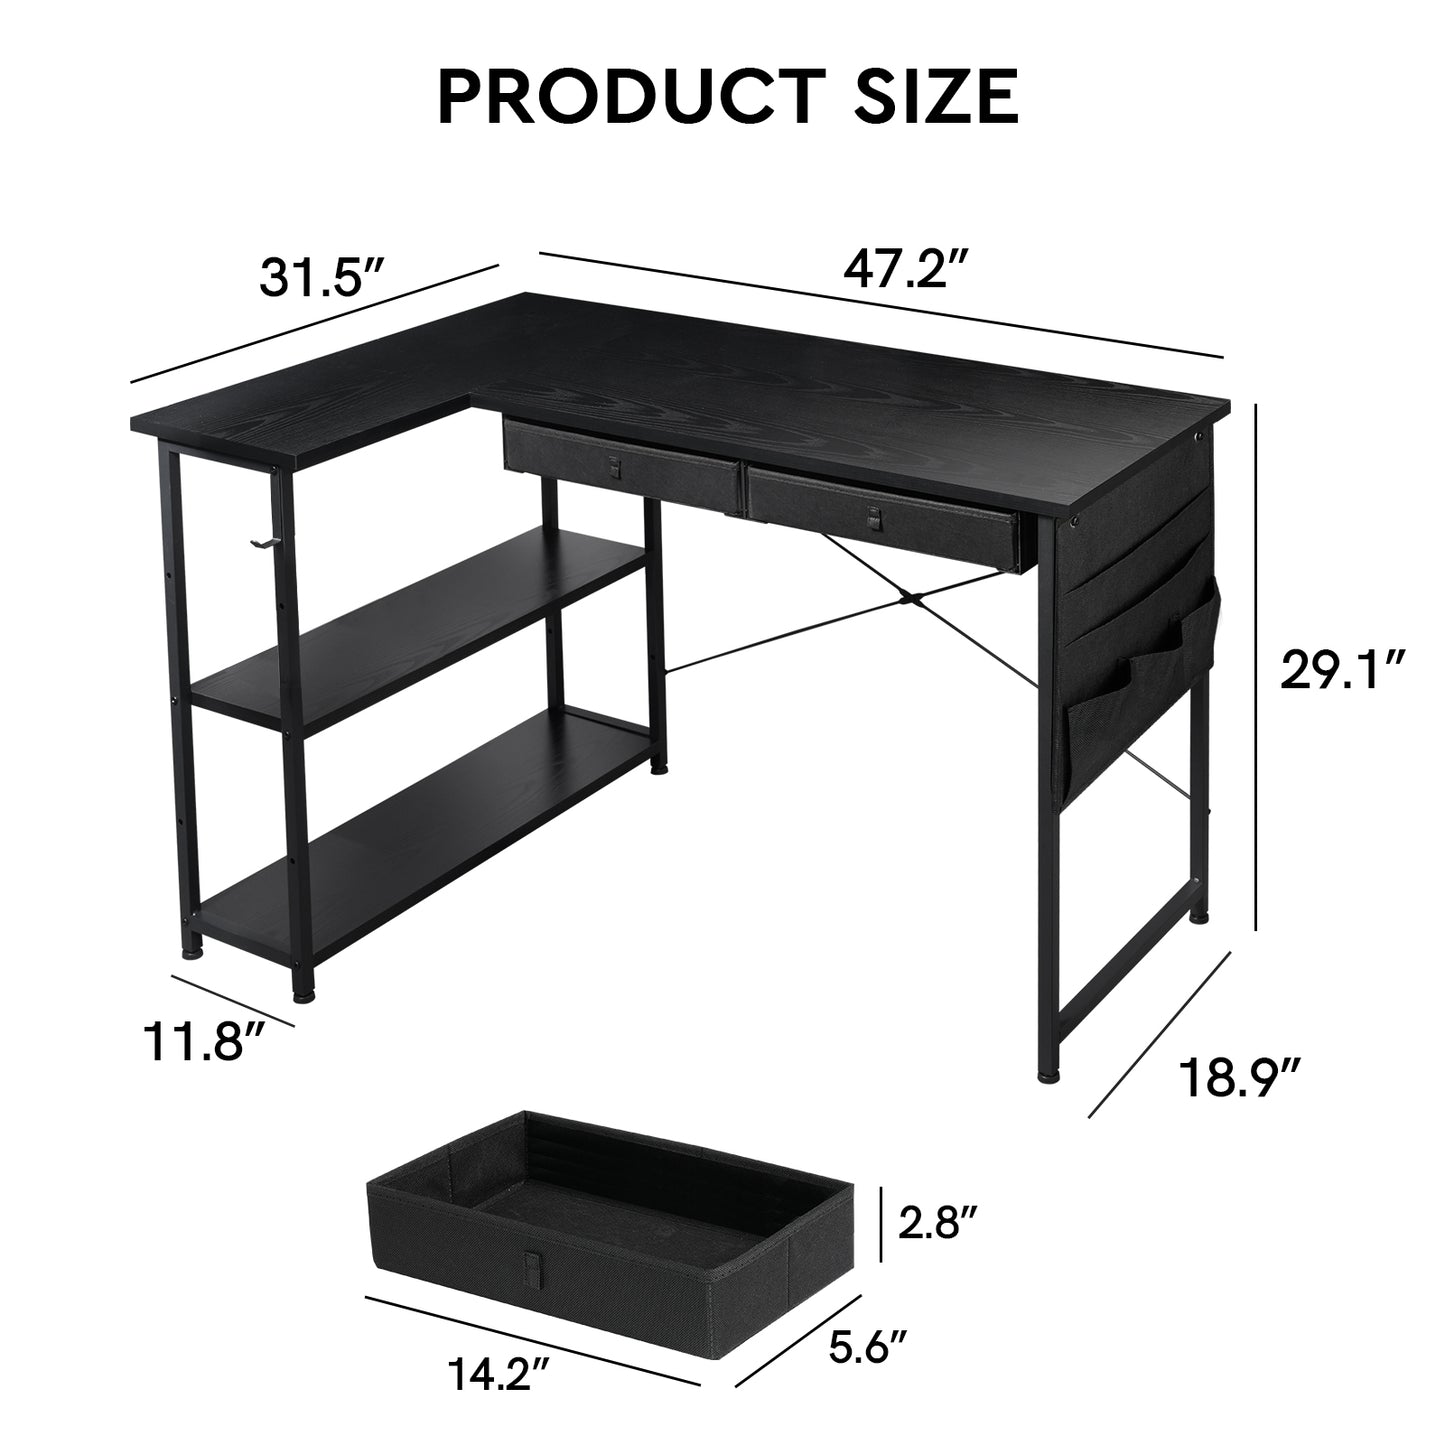 MAIHAIL 47 inch L Shaped Desk, Black